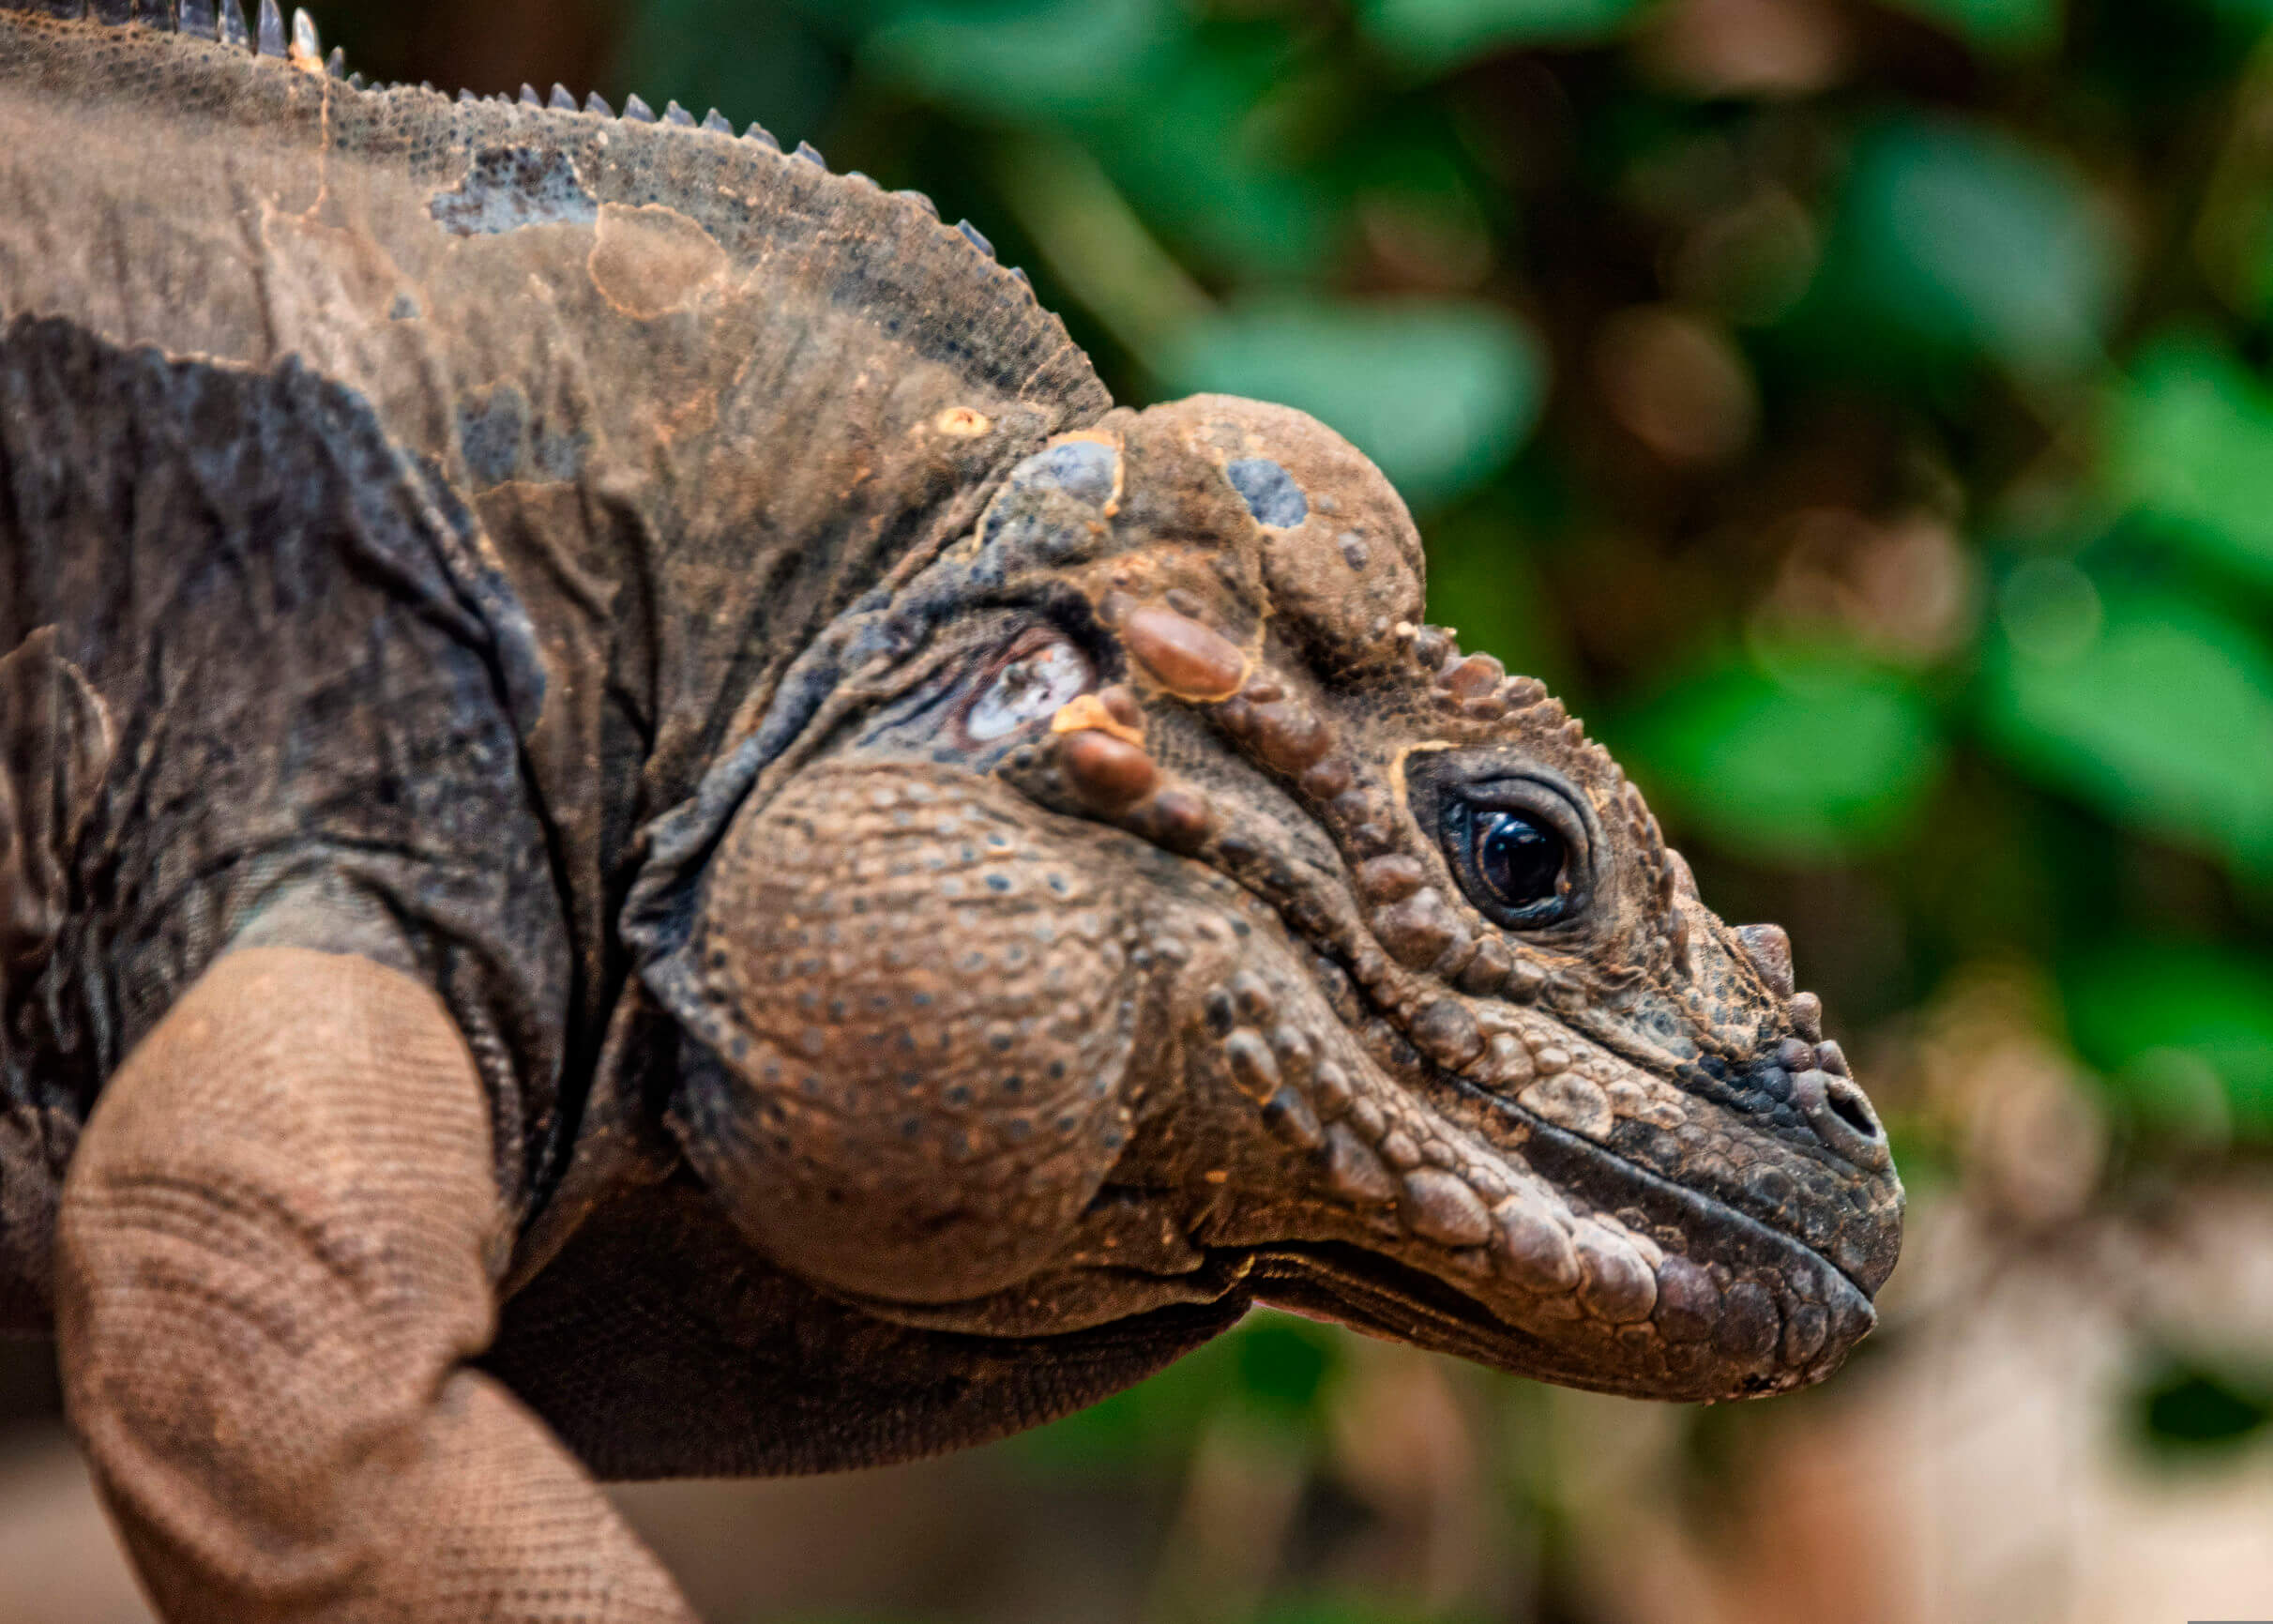 UK, Bristol - April 2019: Rhinoserous iguana in captivity, close up